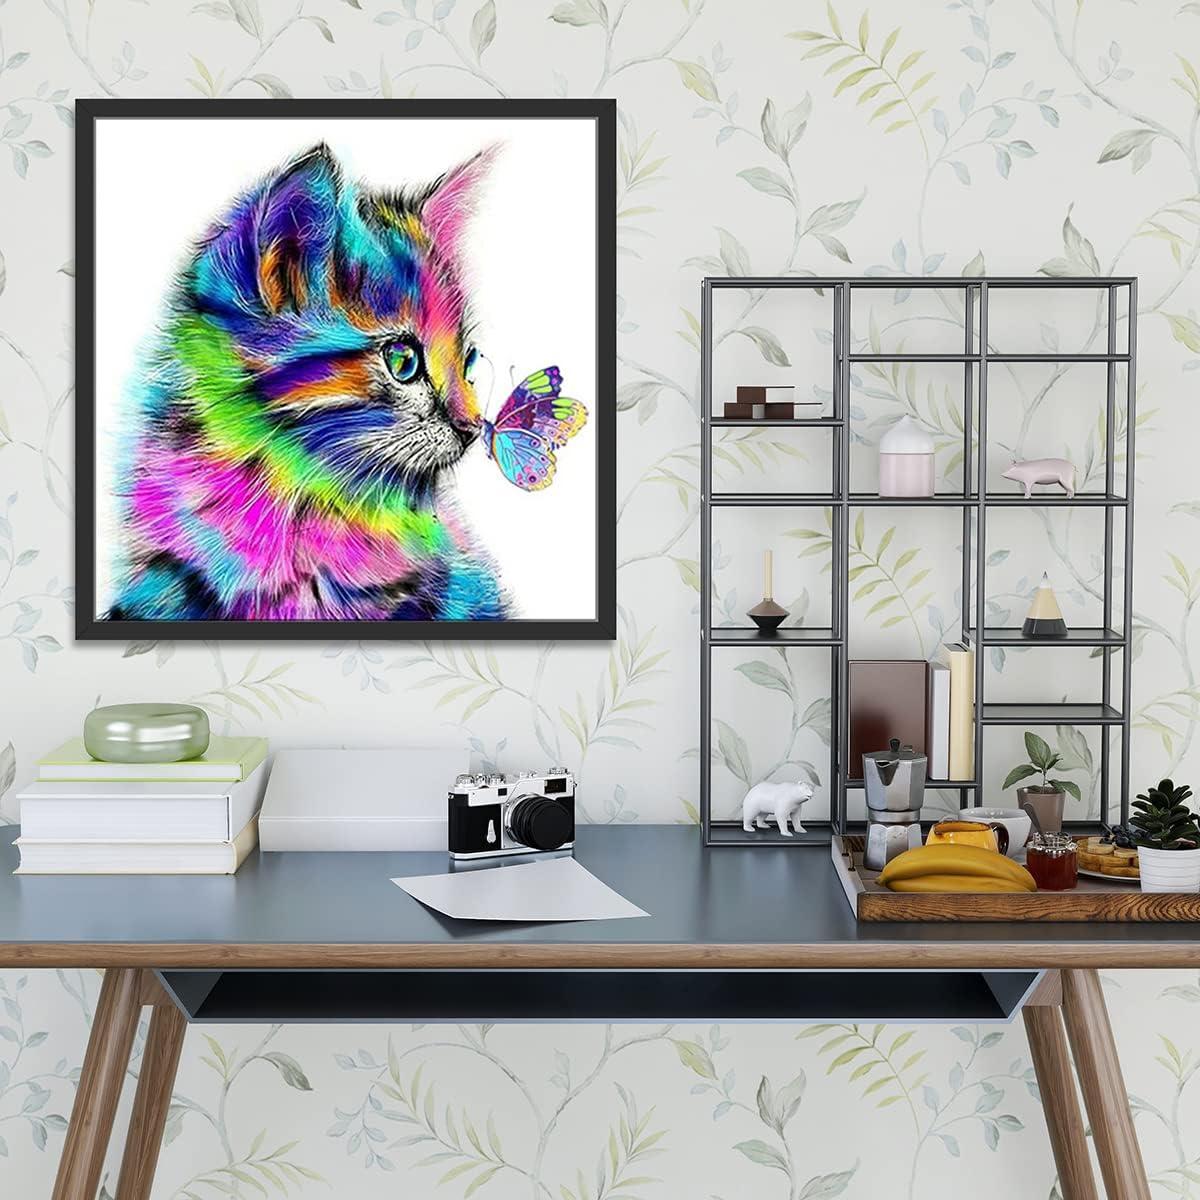 5D Diamond Painting Rainbow Cat Face Kit